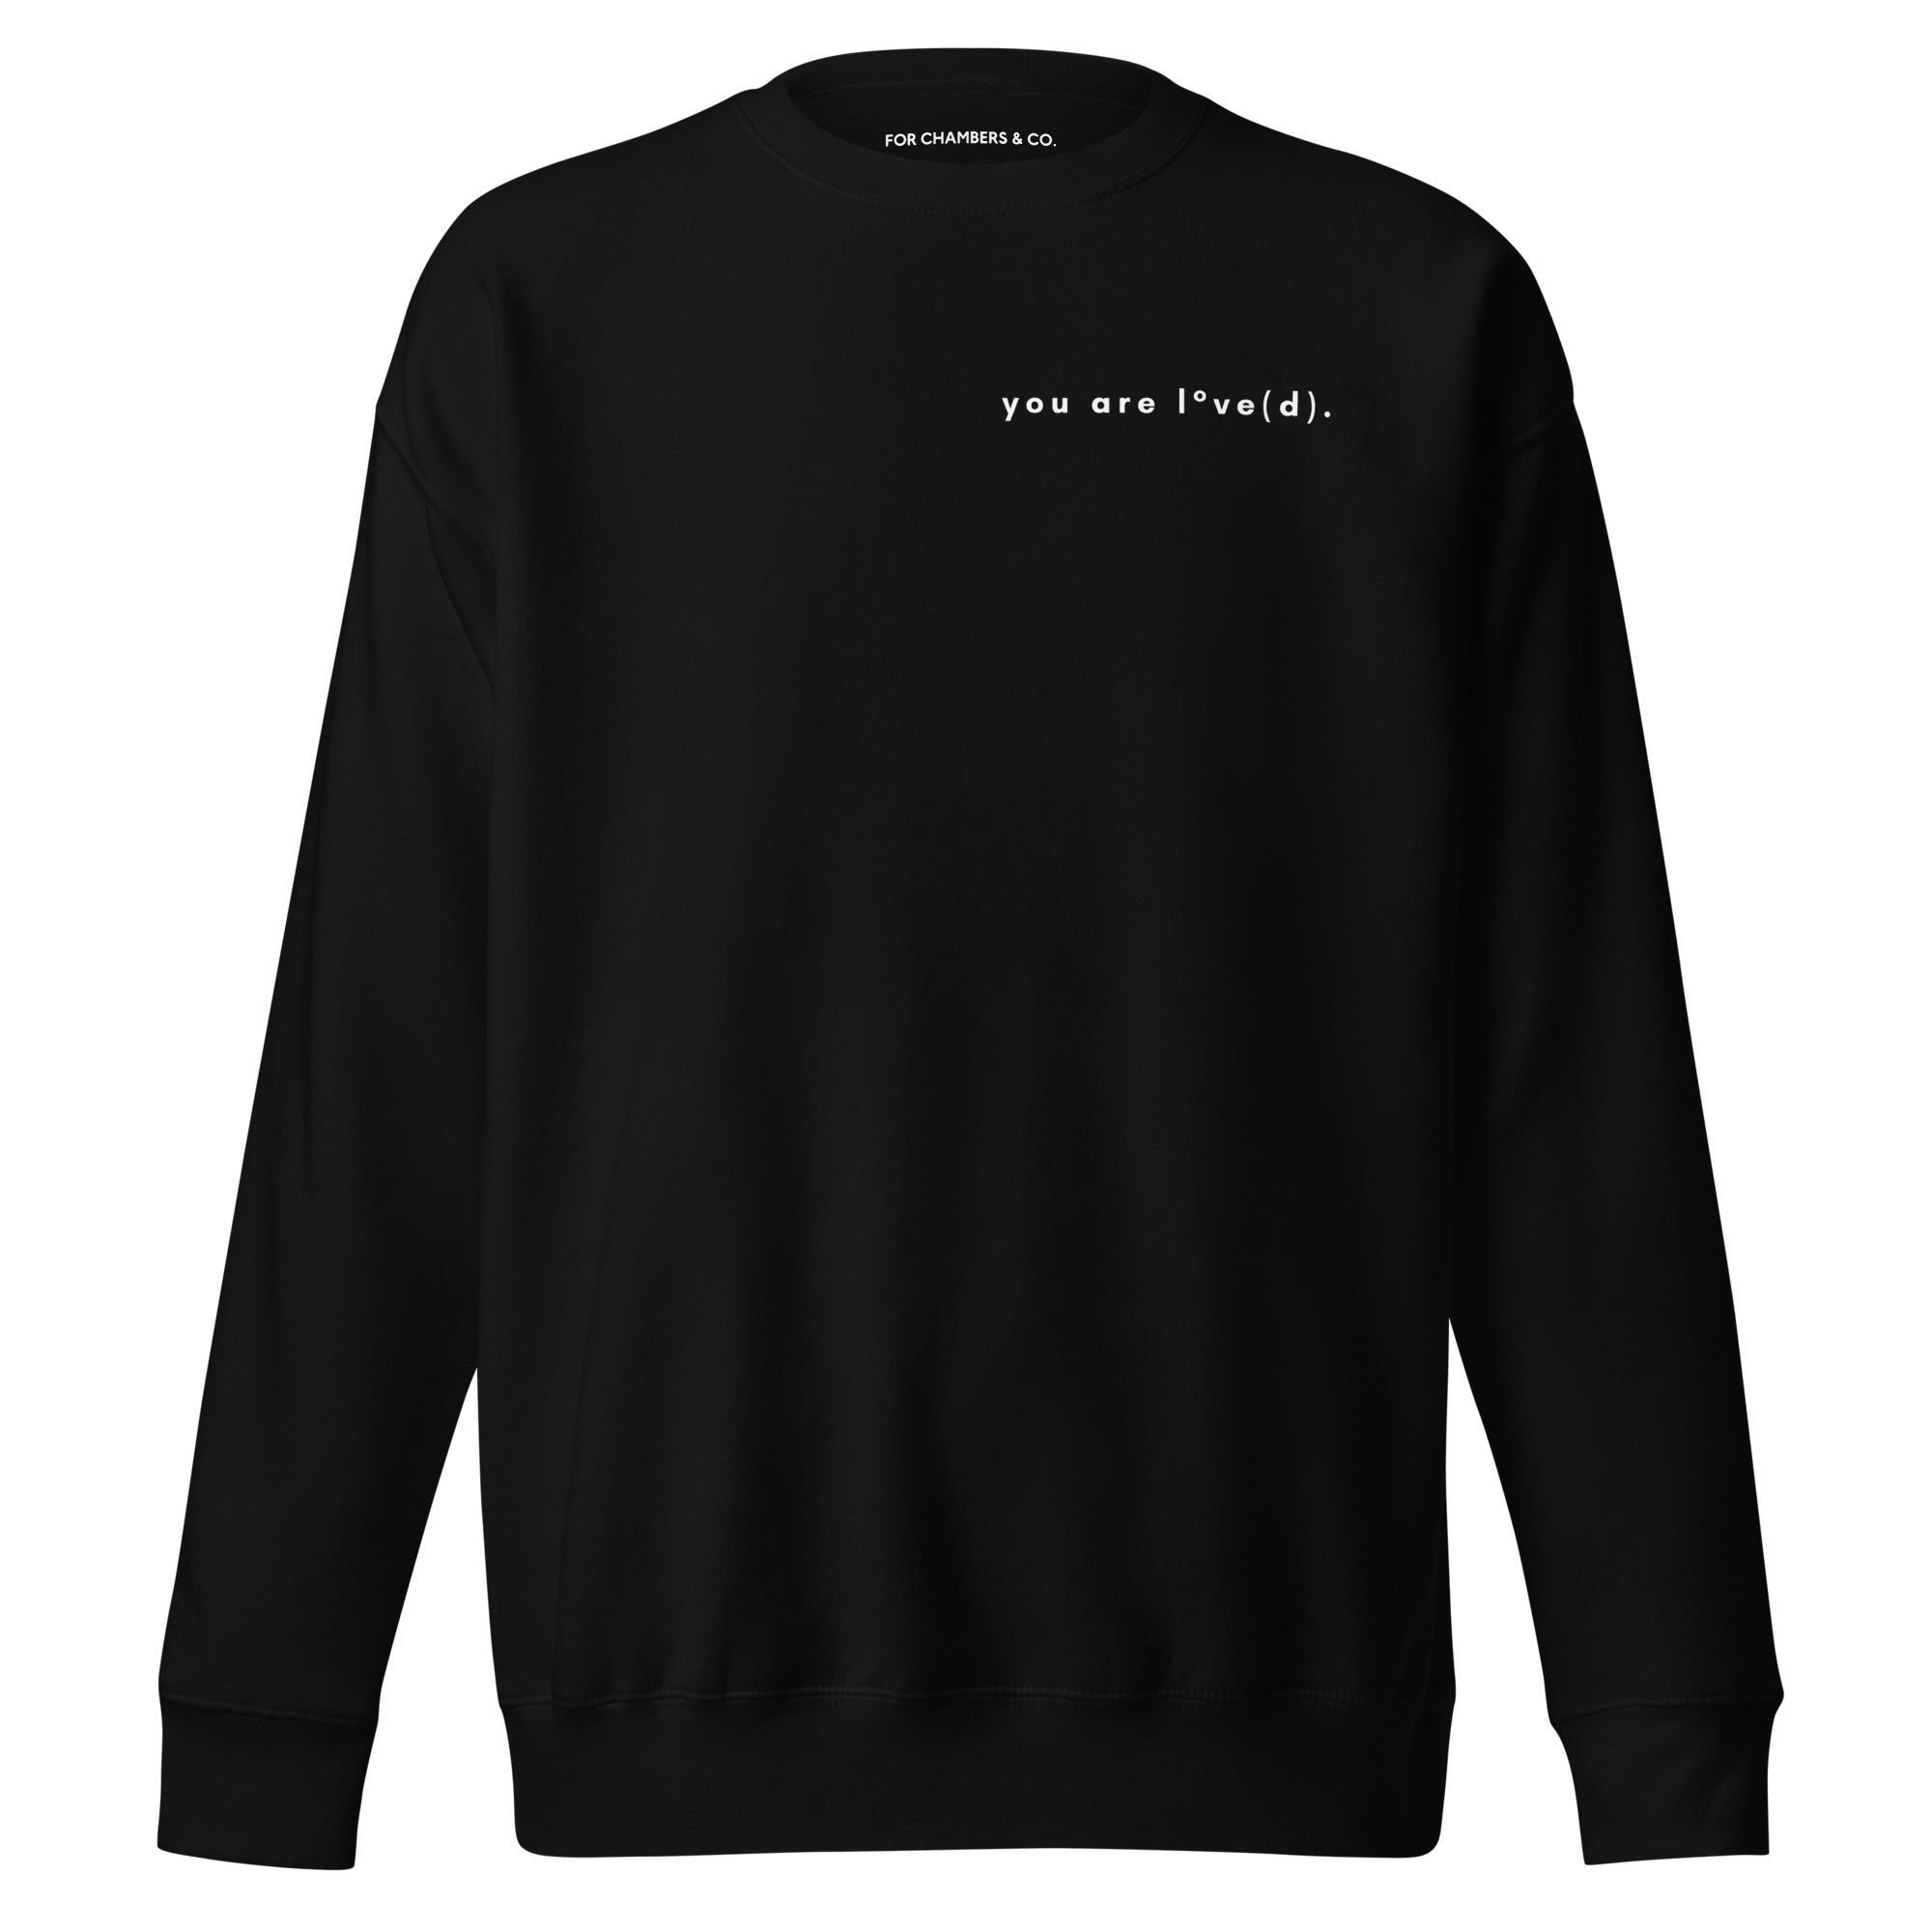 THE PABLO Sweatshirt in Black